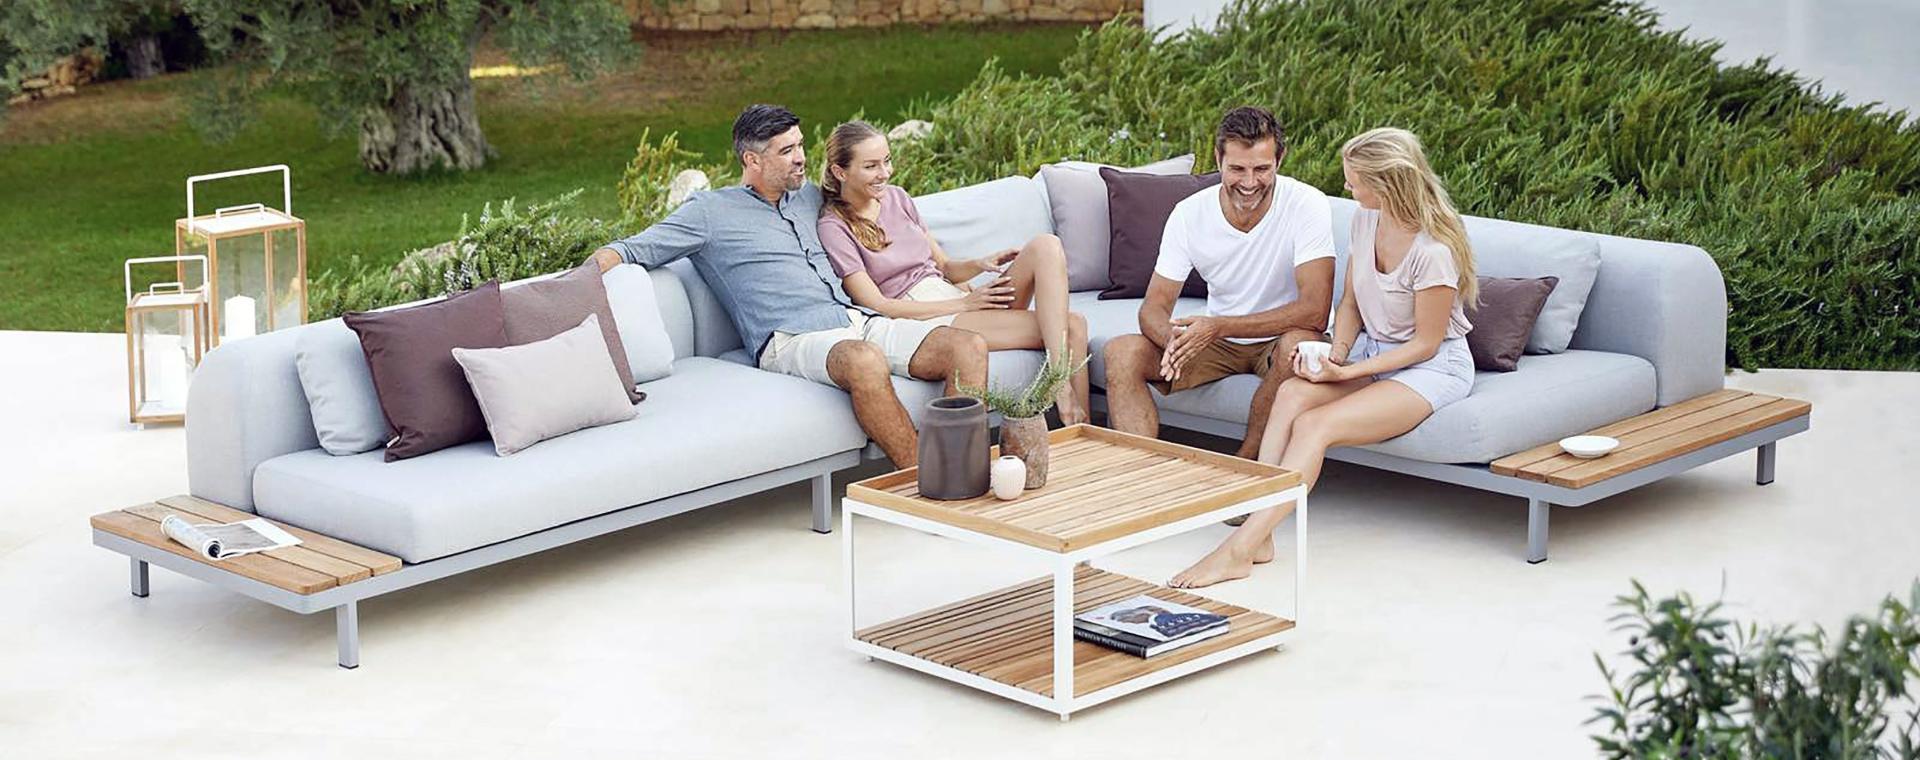 outdoor cyprus furniture